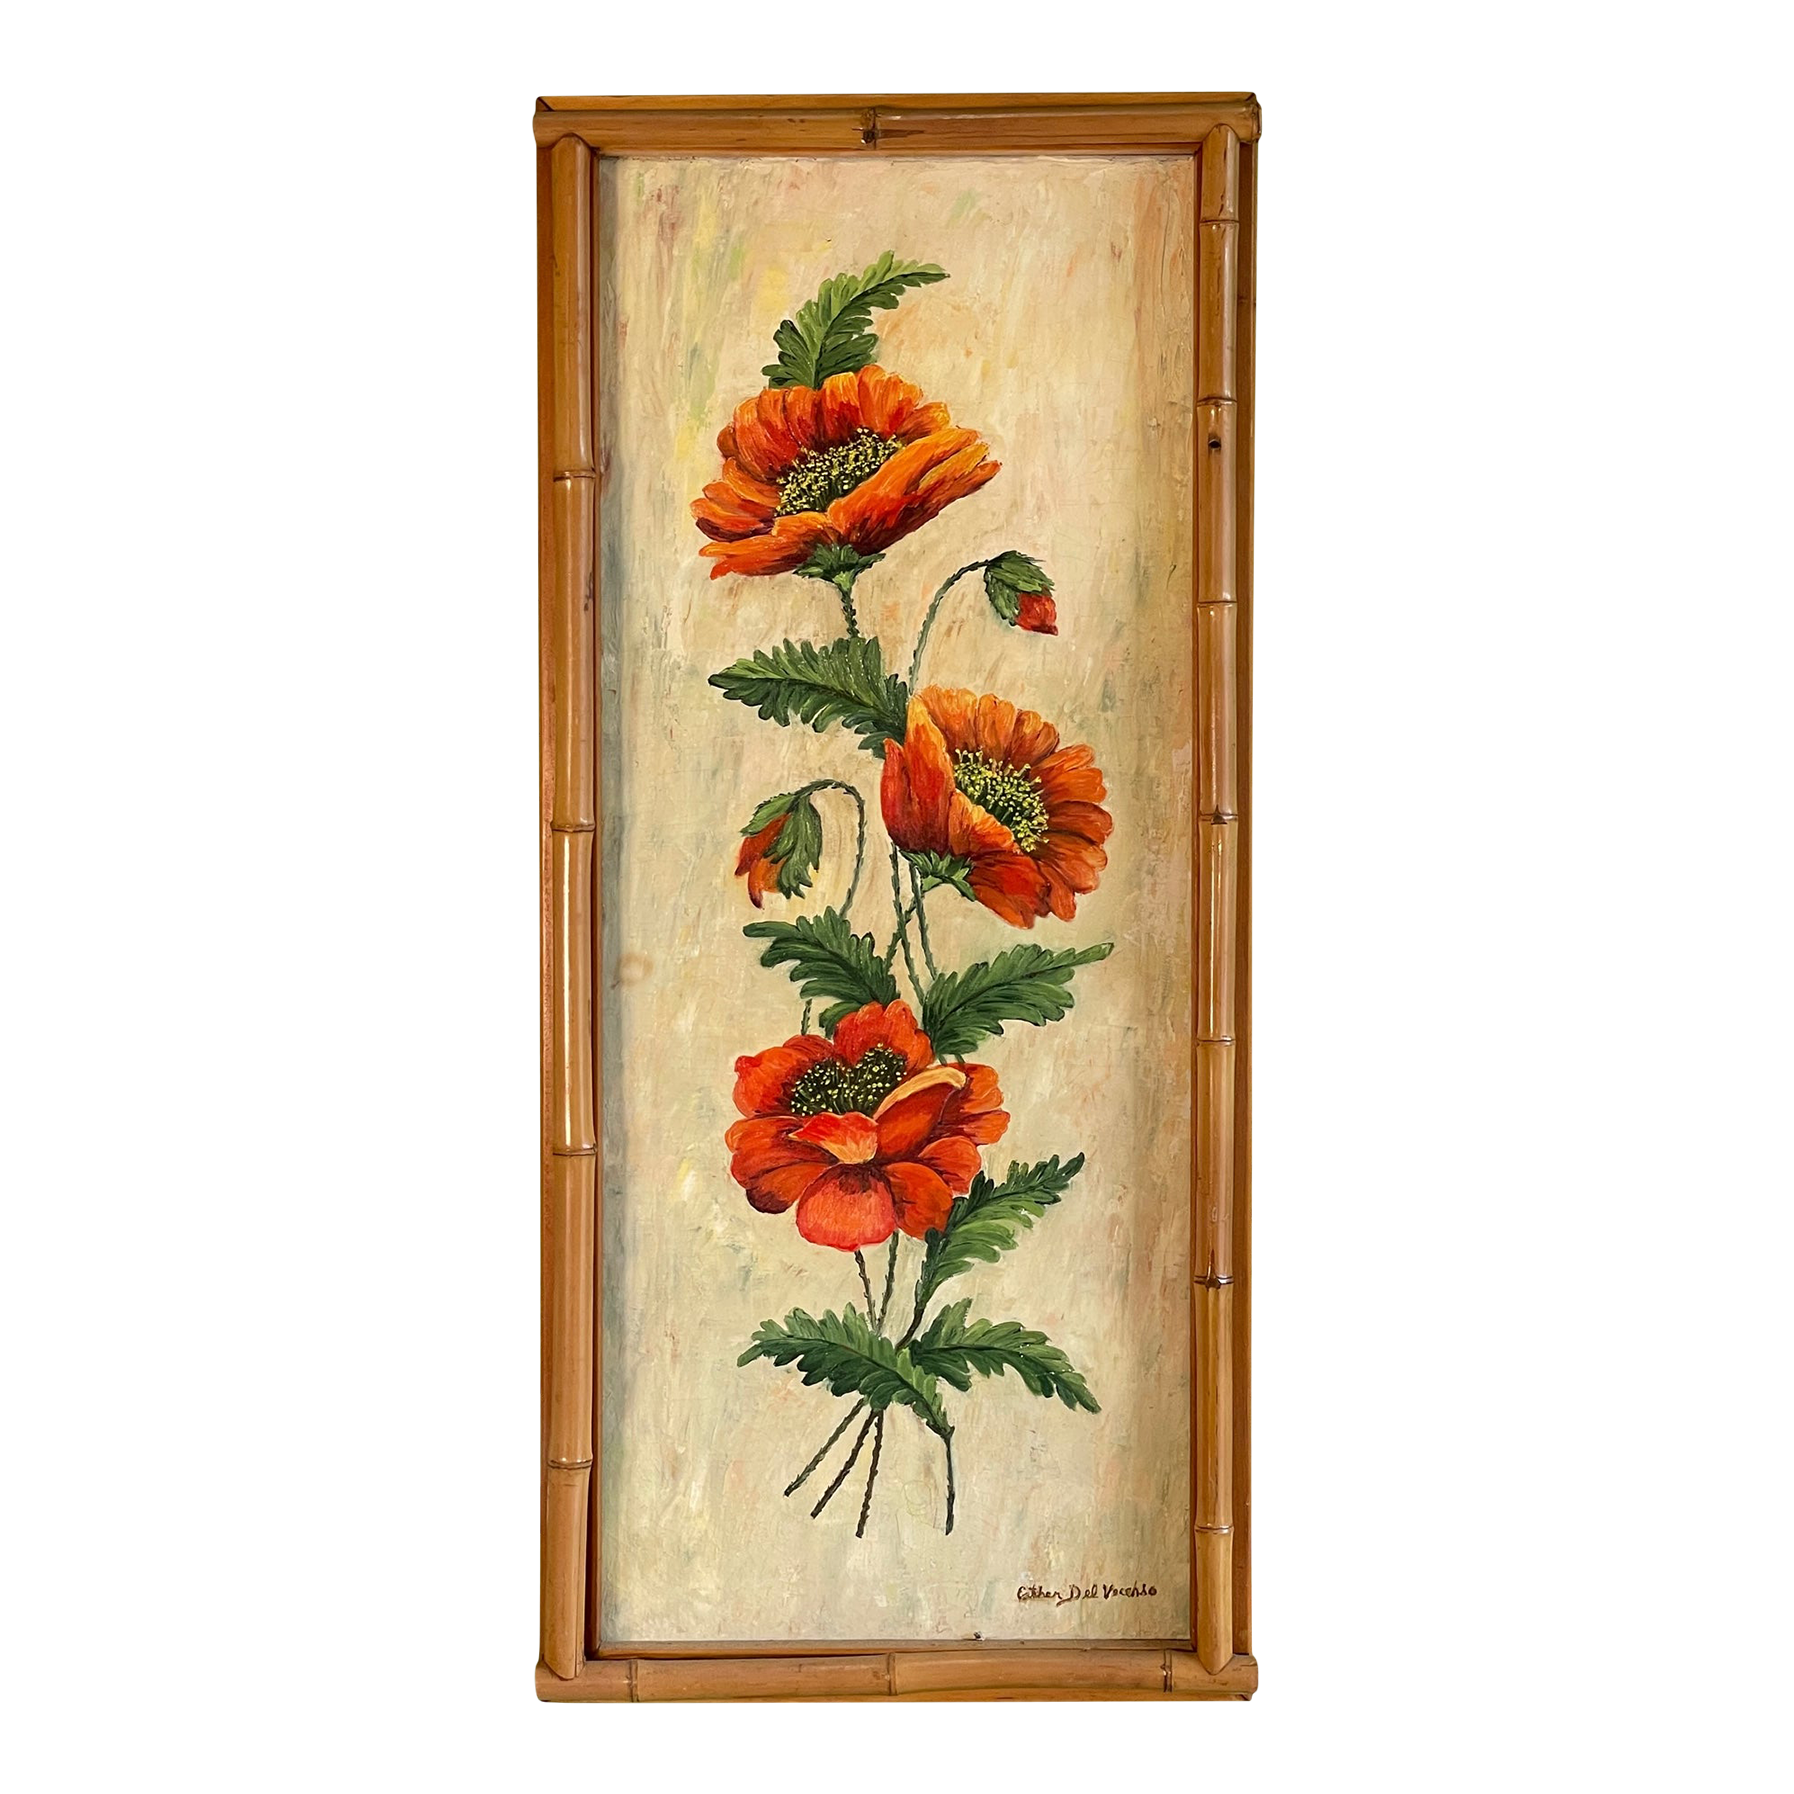 Vintage Bamboo Framed Floral Painting